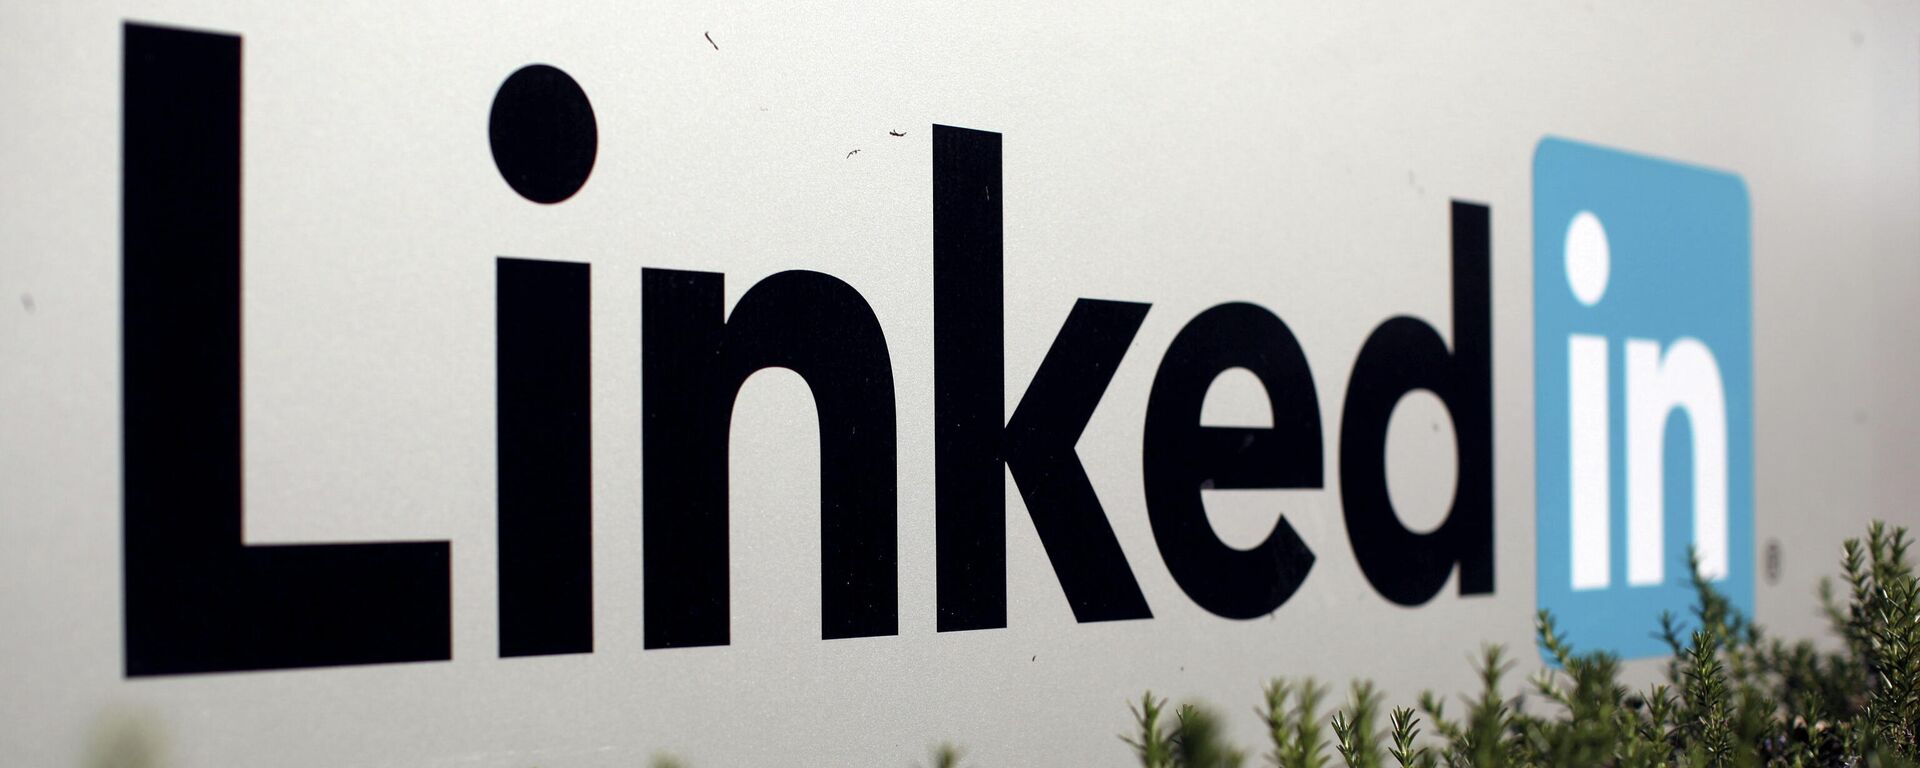 FILE PHOTO: The logo for LinkedIn Corporation is shown in Mountain View, California, U.S. February 6, 2013 - Sputnik International, 1920, 15.10.2021